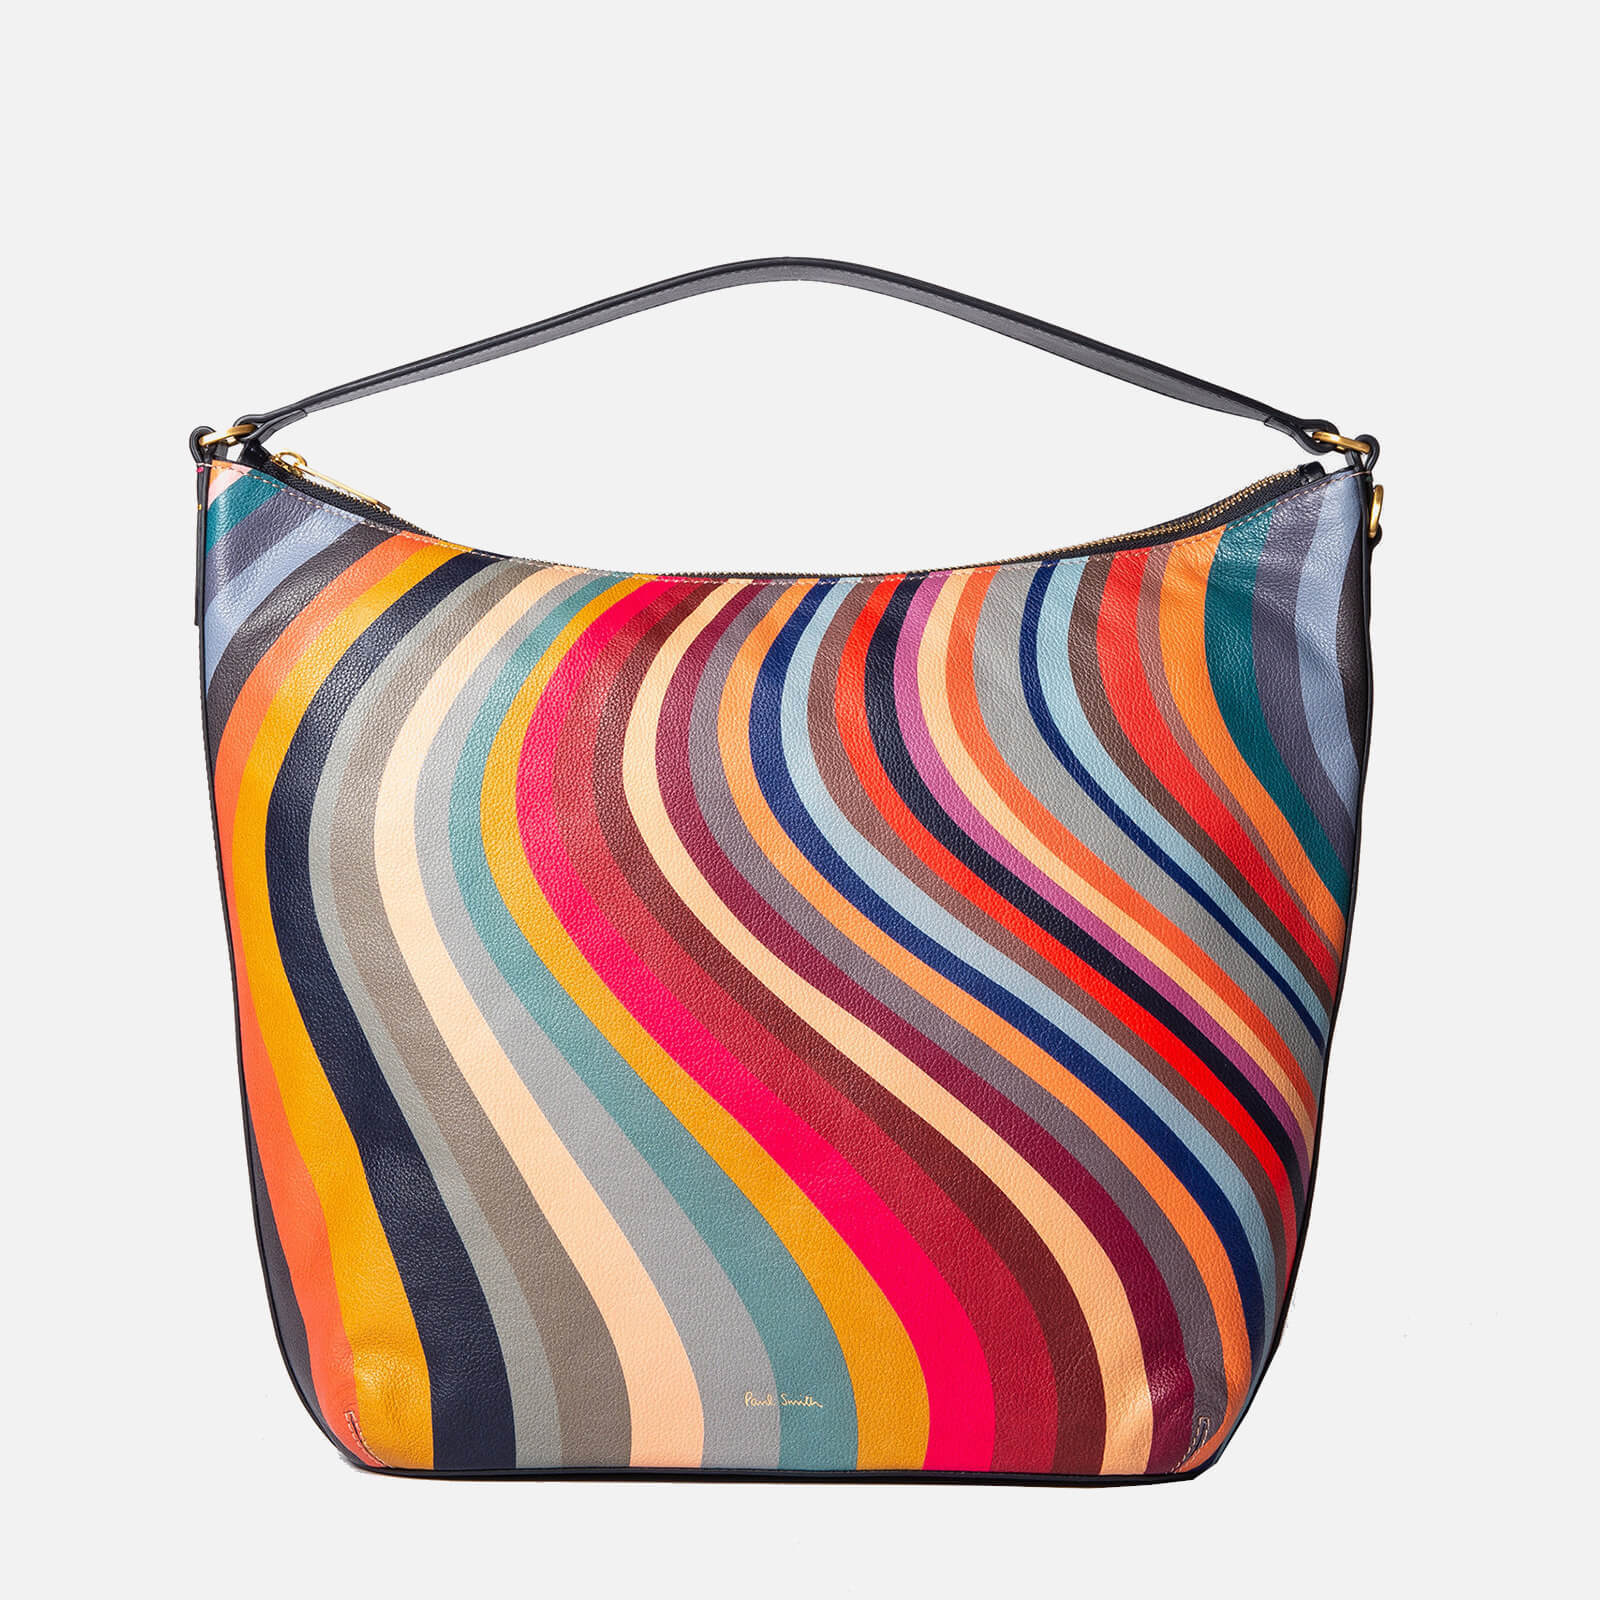 Paul Smith Women's Swirl Medium Hobo Bag - Multi